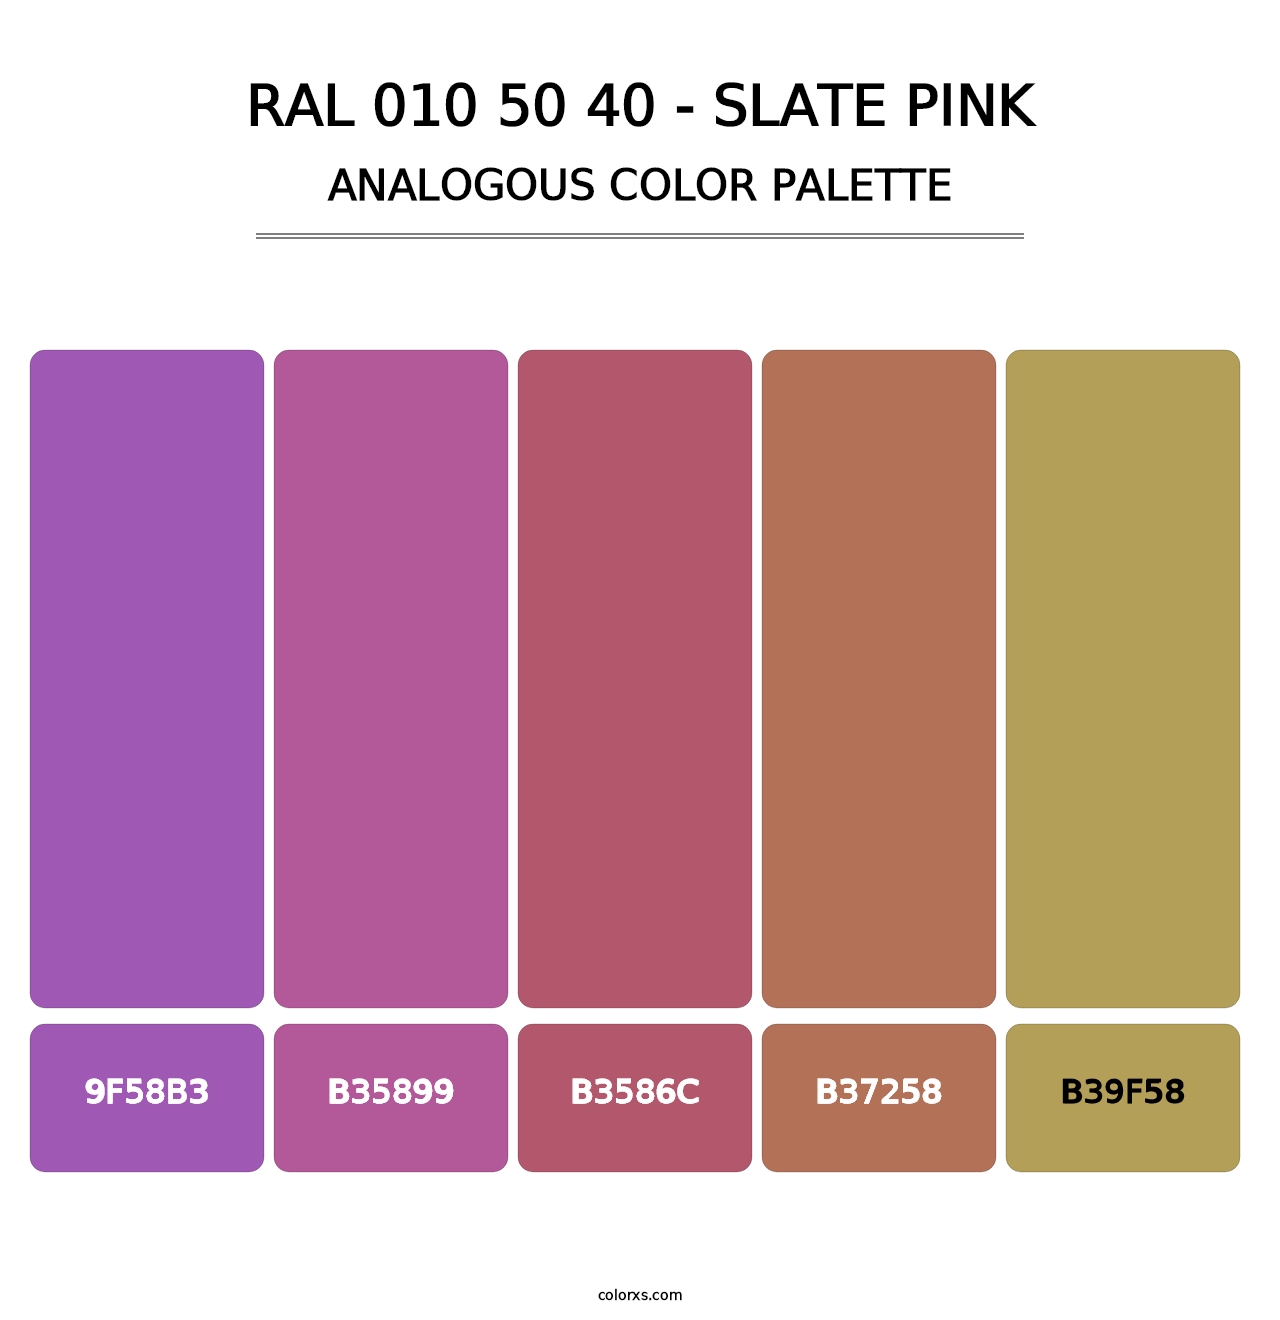 RAL 010 50 40 - Slate Pink - Analogous Color Palette